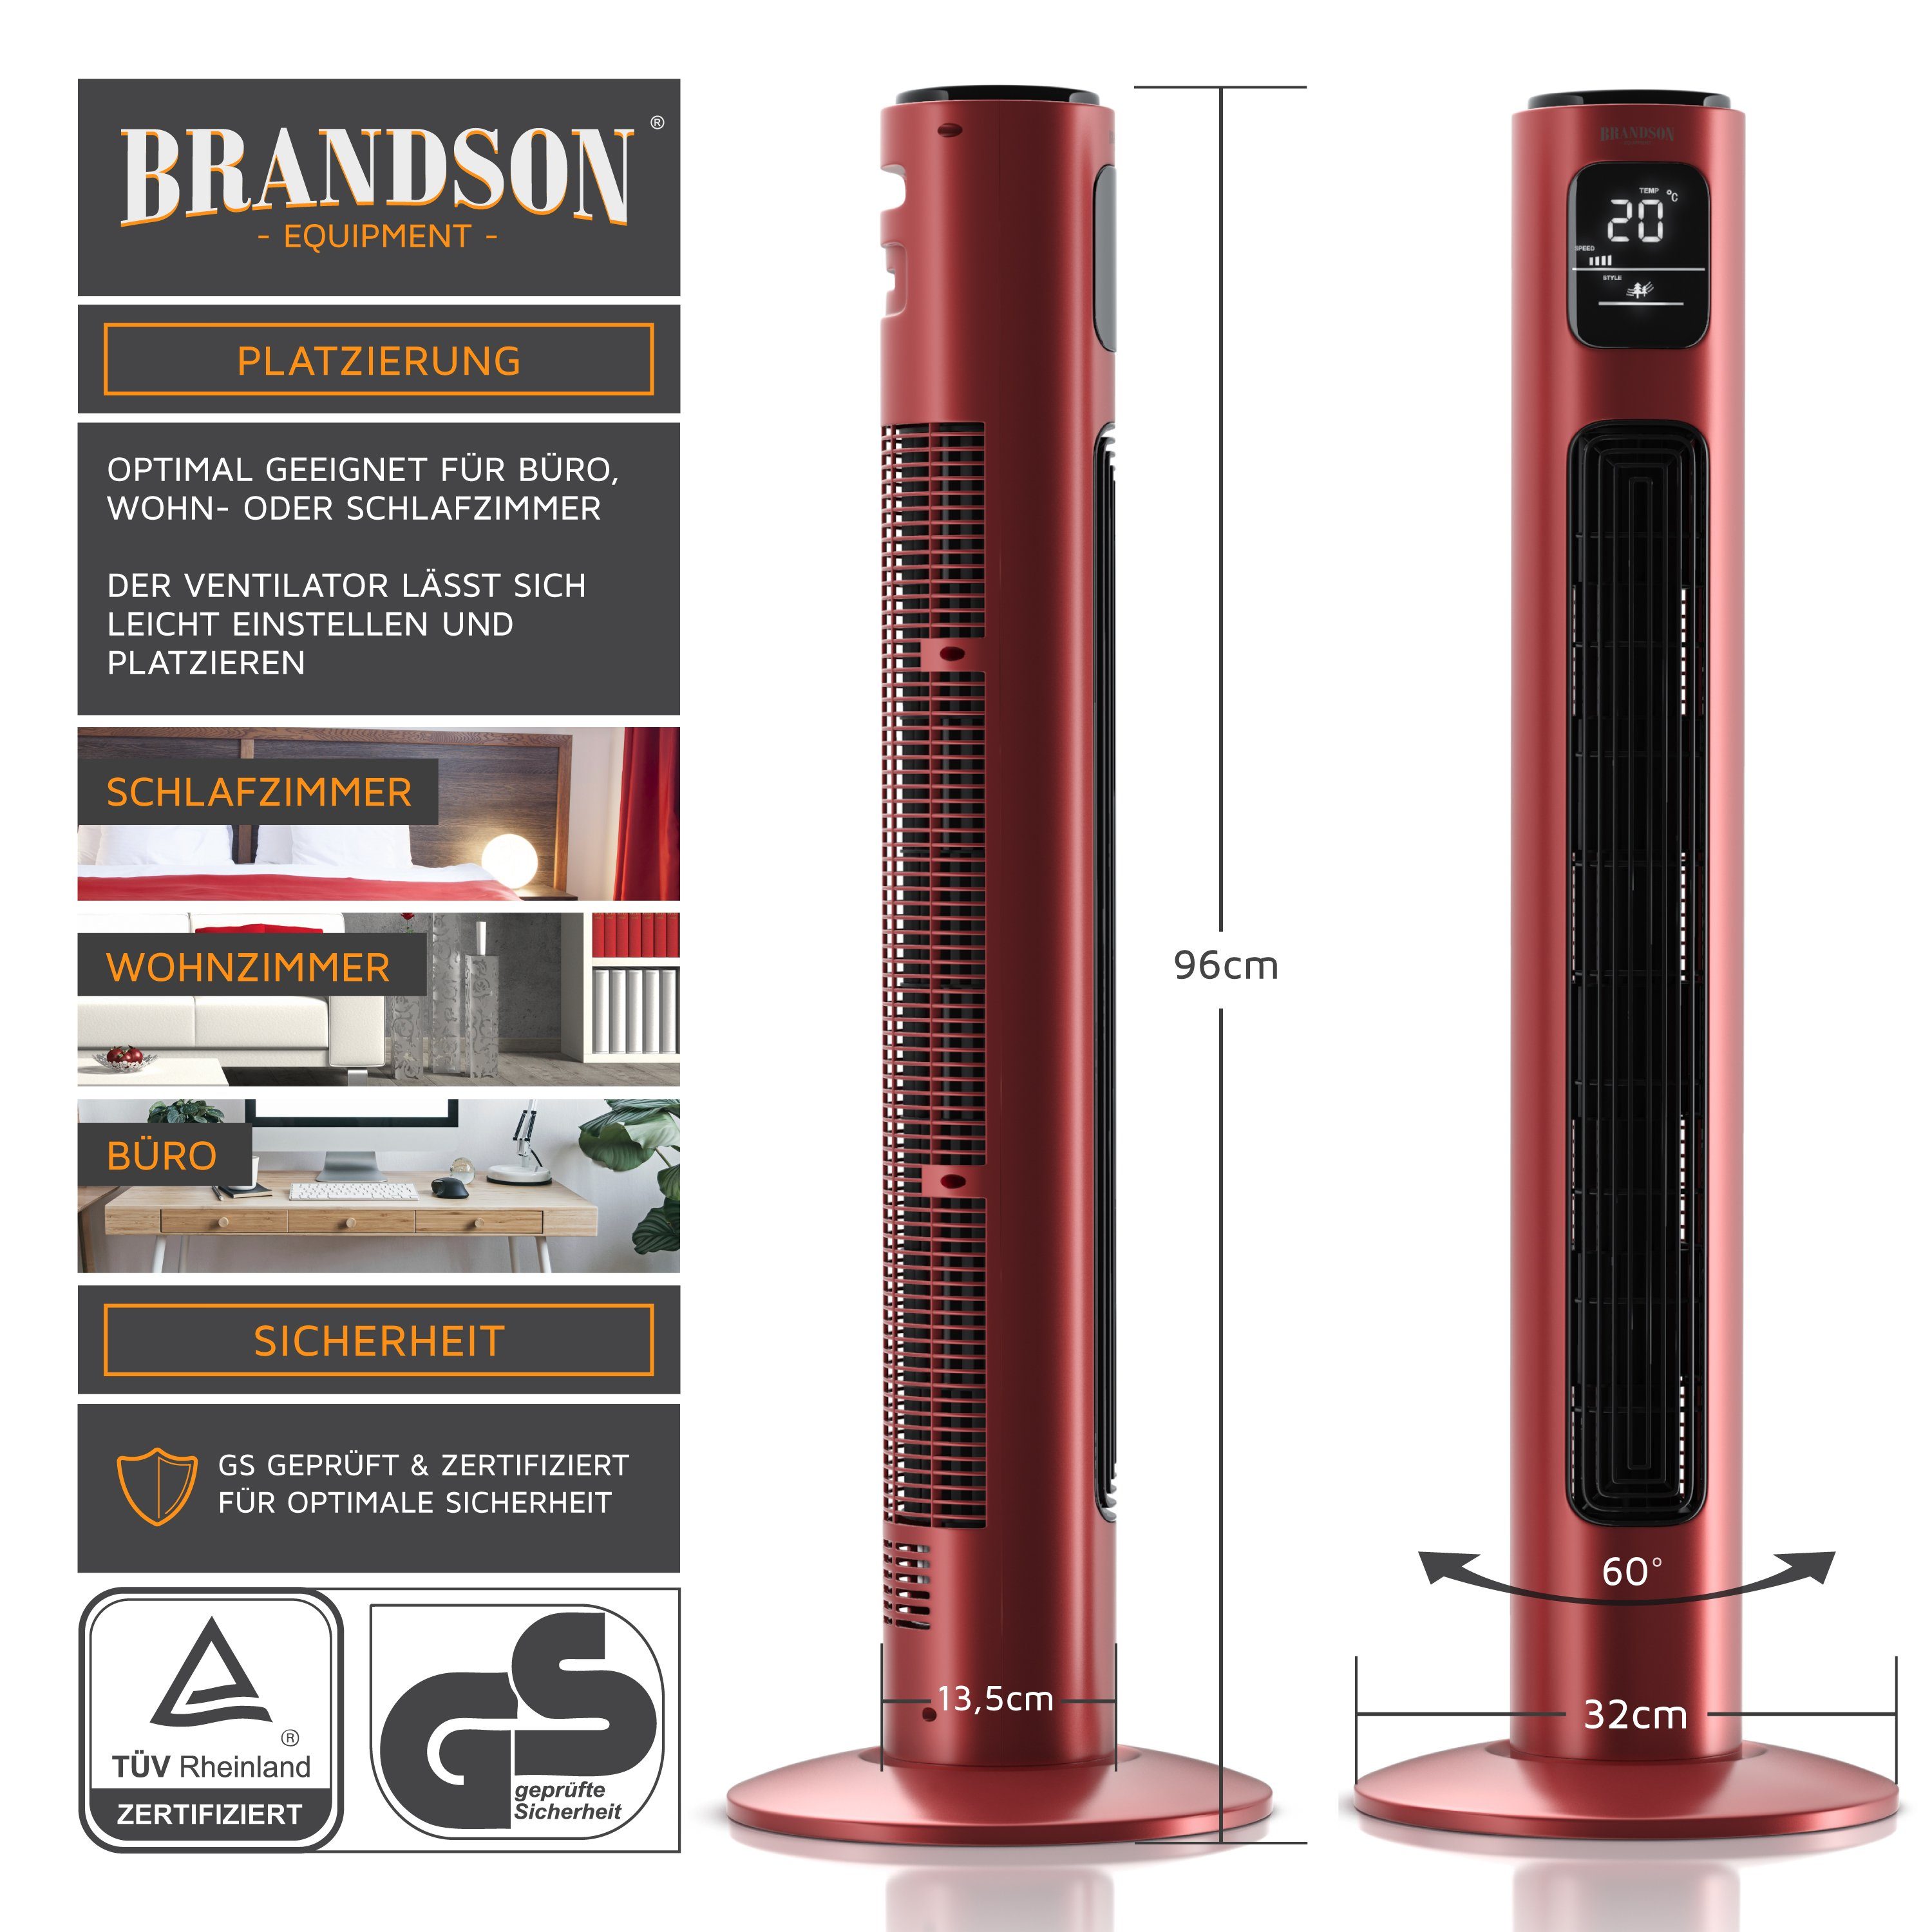 Brandson Oszillation Turmventilator, 96cm, Rubinrot 65°, Timer, Fernbedienung, Standventilator